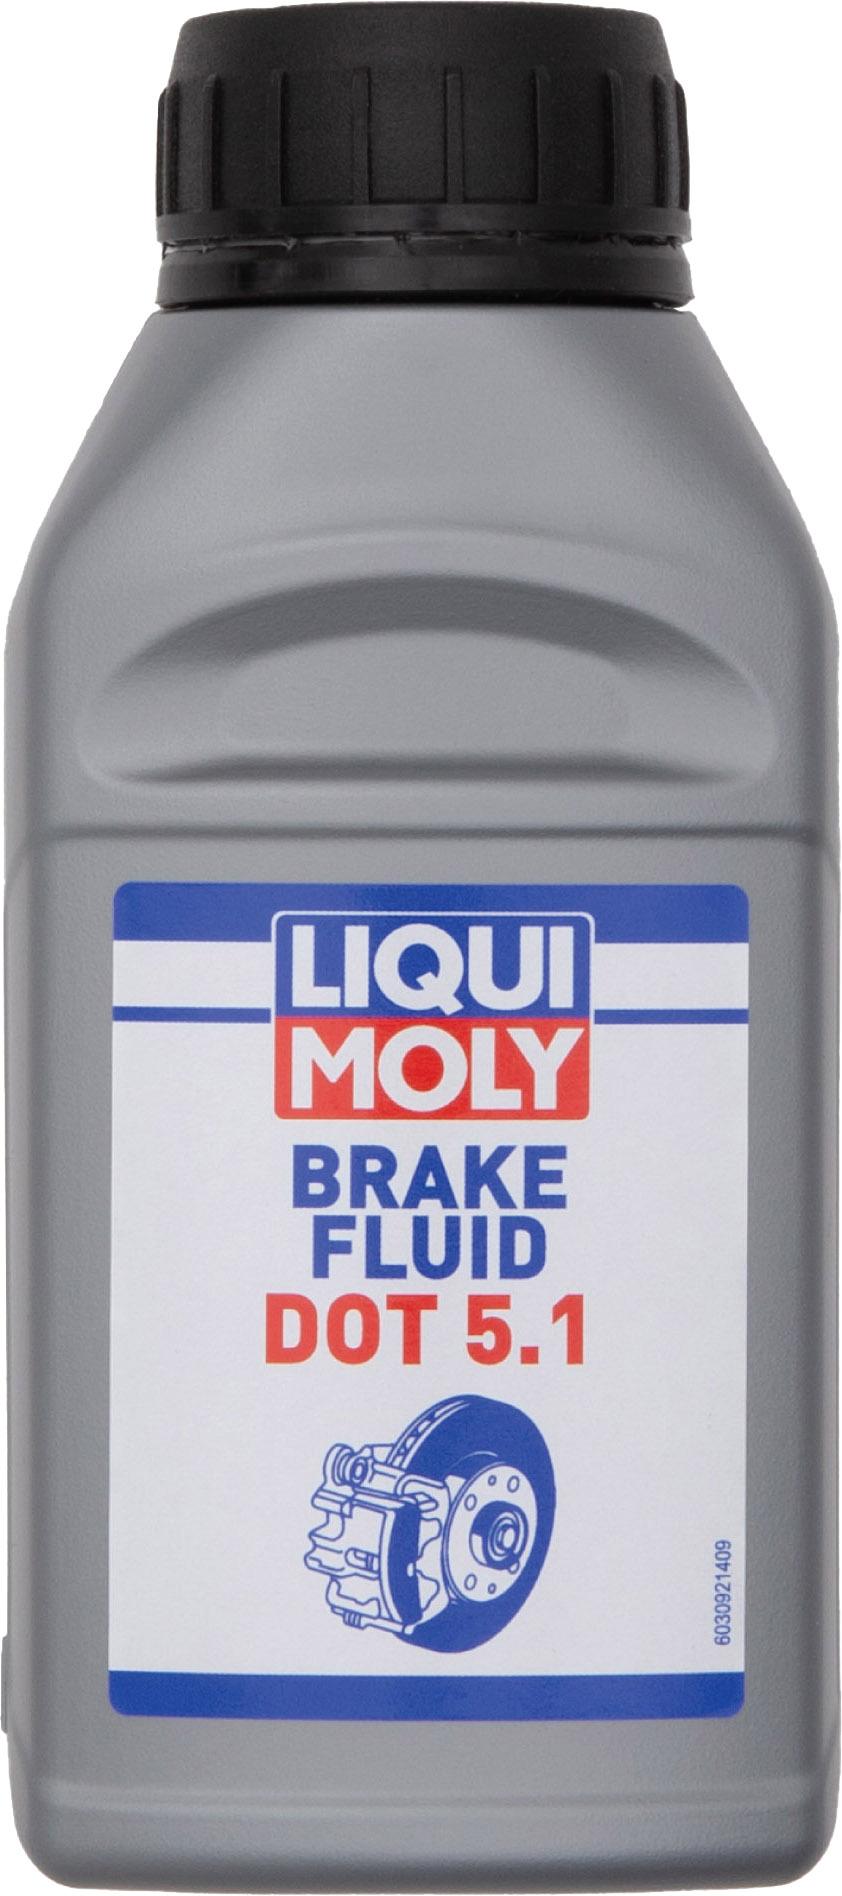 Bleed Kit Liqui Moly Dot 5.1 Brake Fluid (250ml) - Yellow